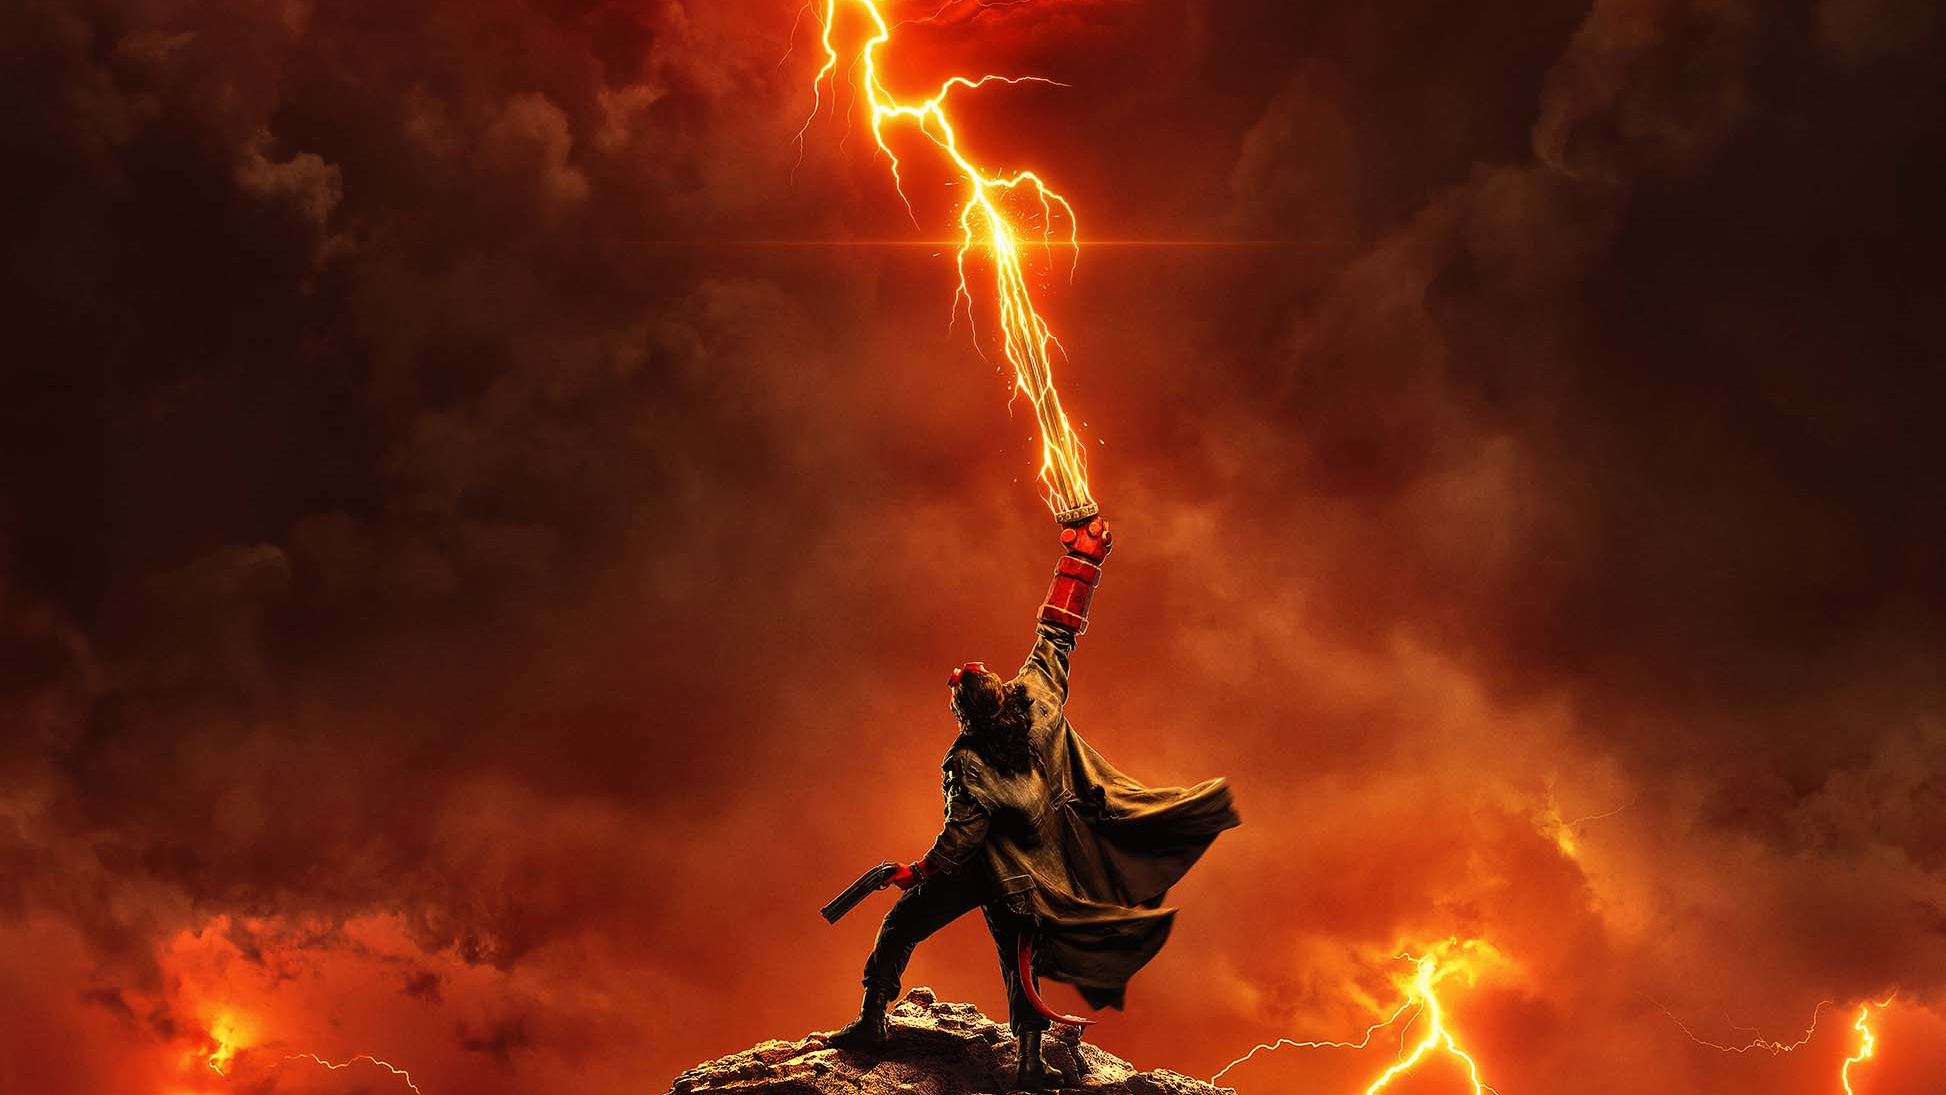 Movie Hellboy (2019) HD Wallpaper | Background Image